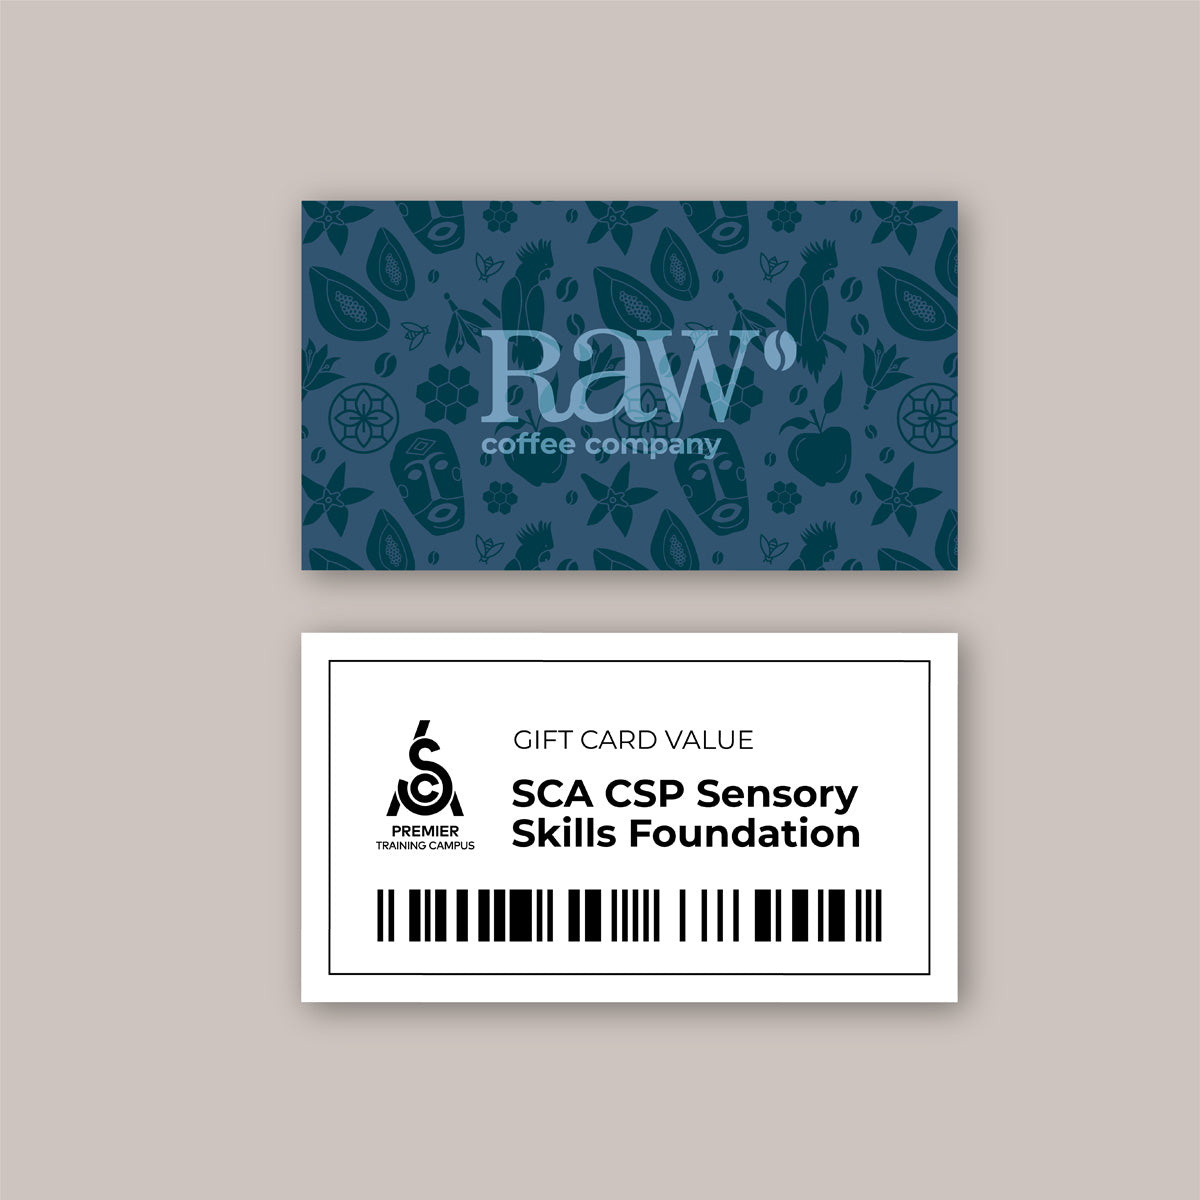 SCA-CSP-Sensory-Skills-Foundation-Gift-Voucher_RAW-Coffee-Company